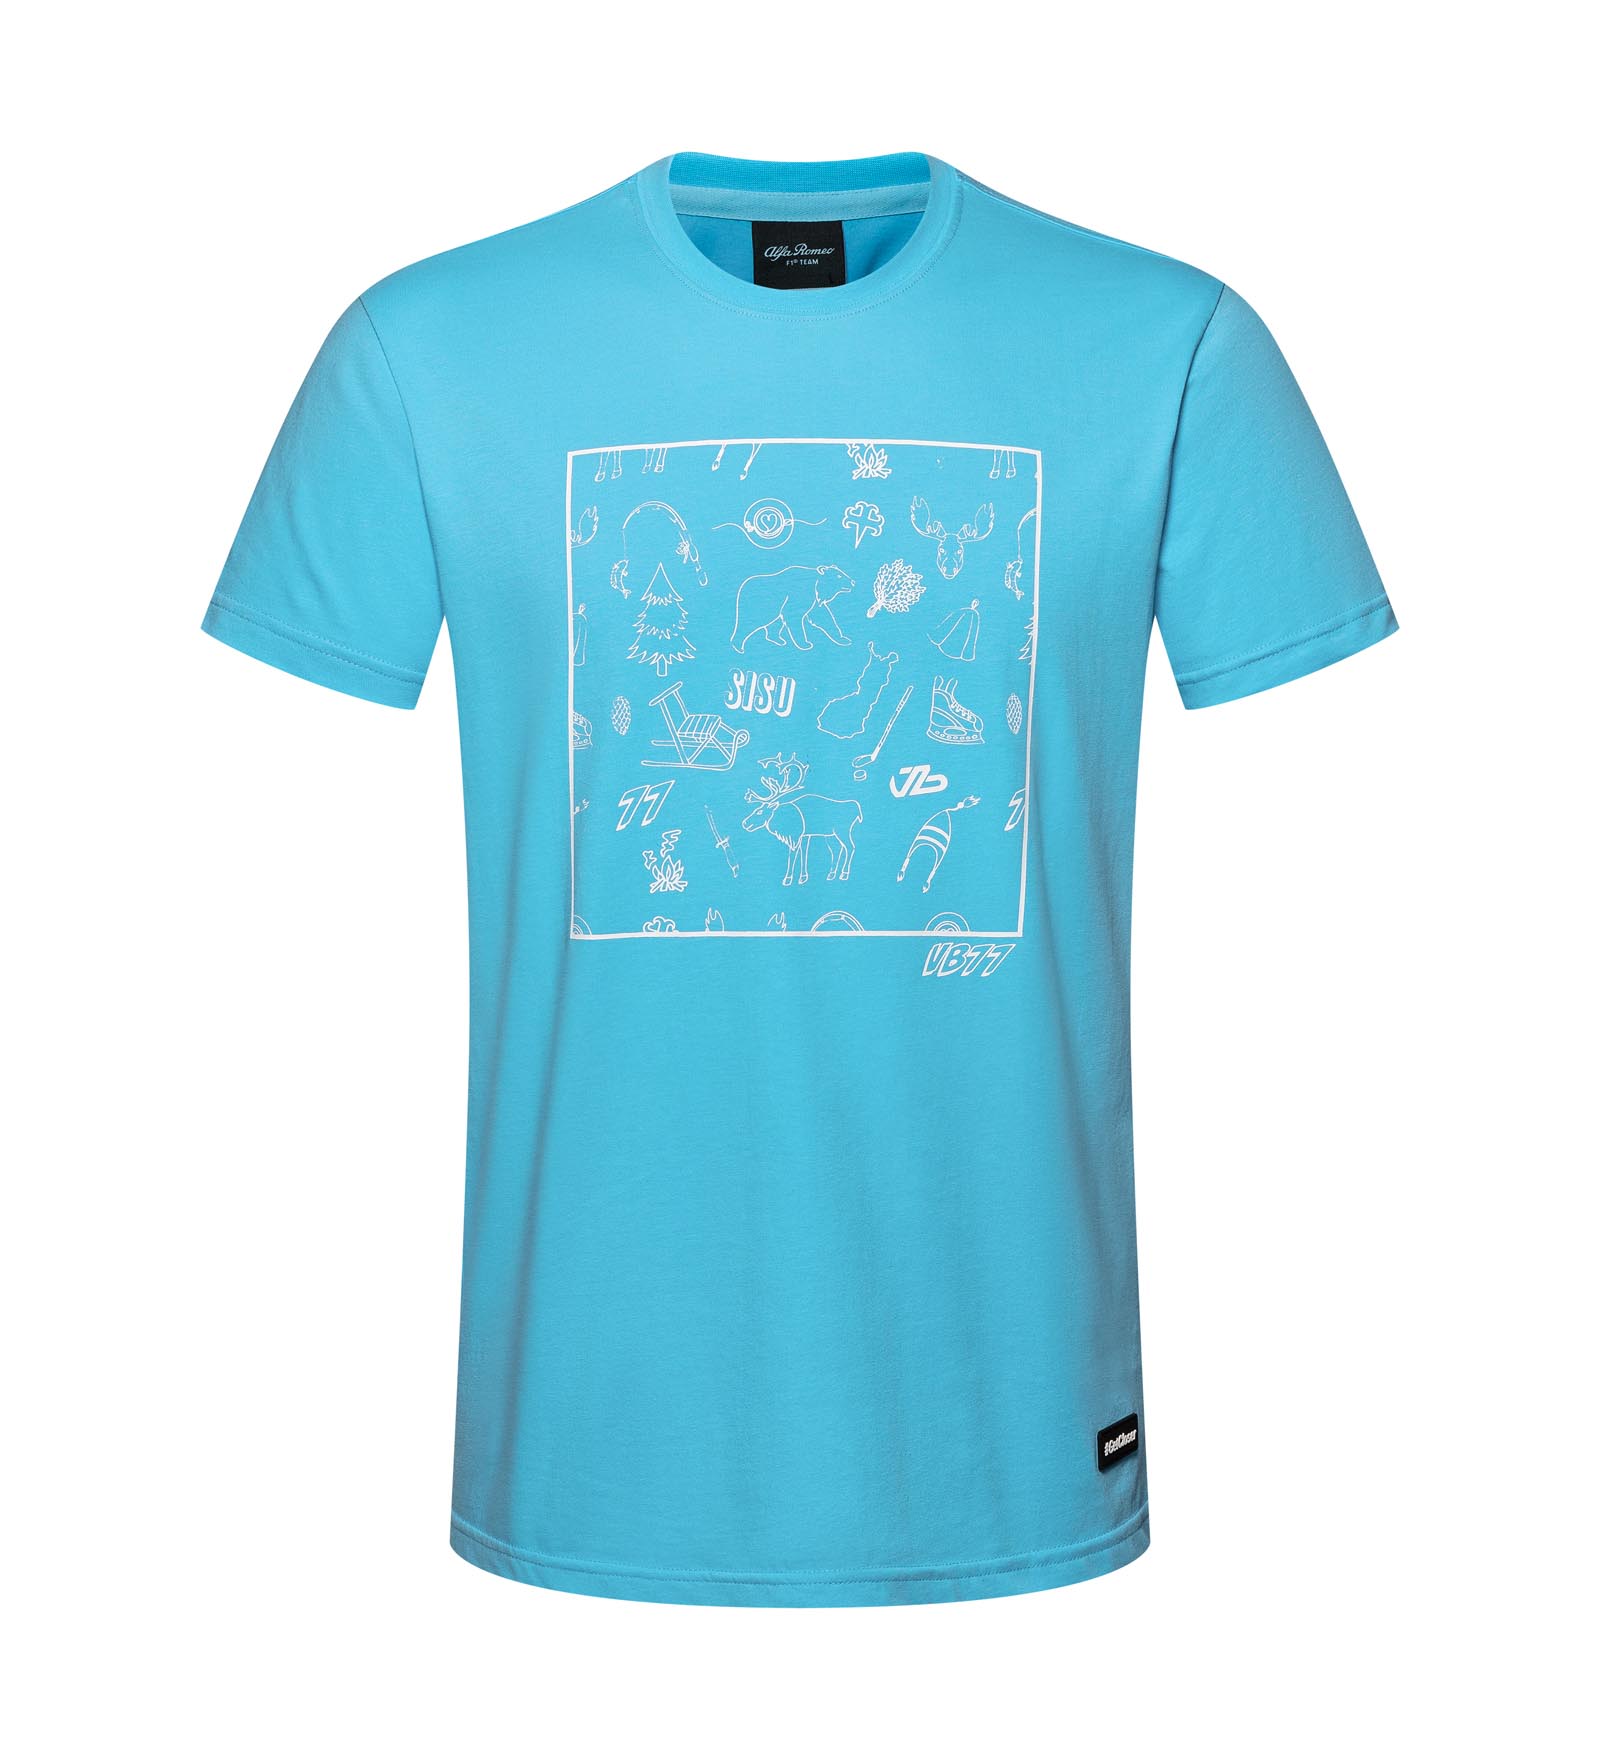 T-Shirt #TeamBottas Blau XXL Valtteri Bottas